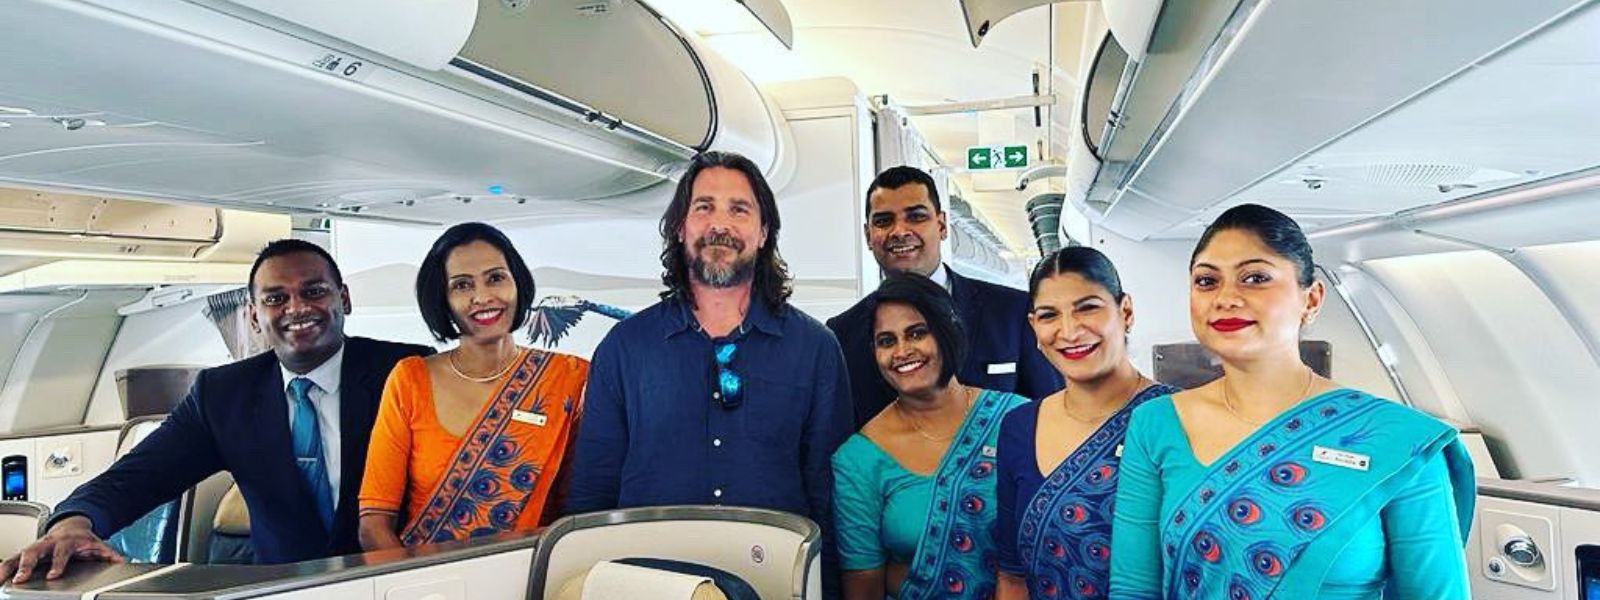 Hollywood actor Christian Bale flies SriLankan